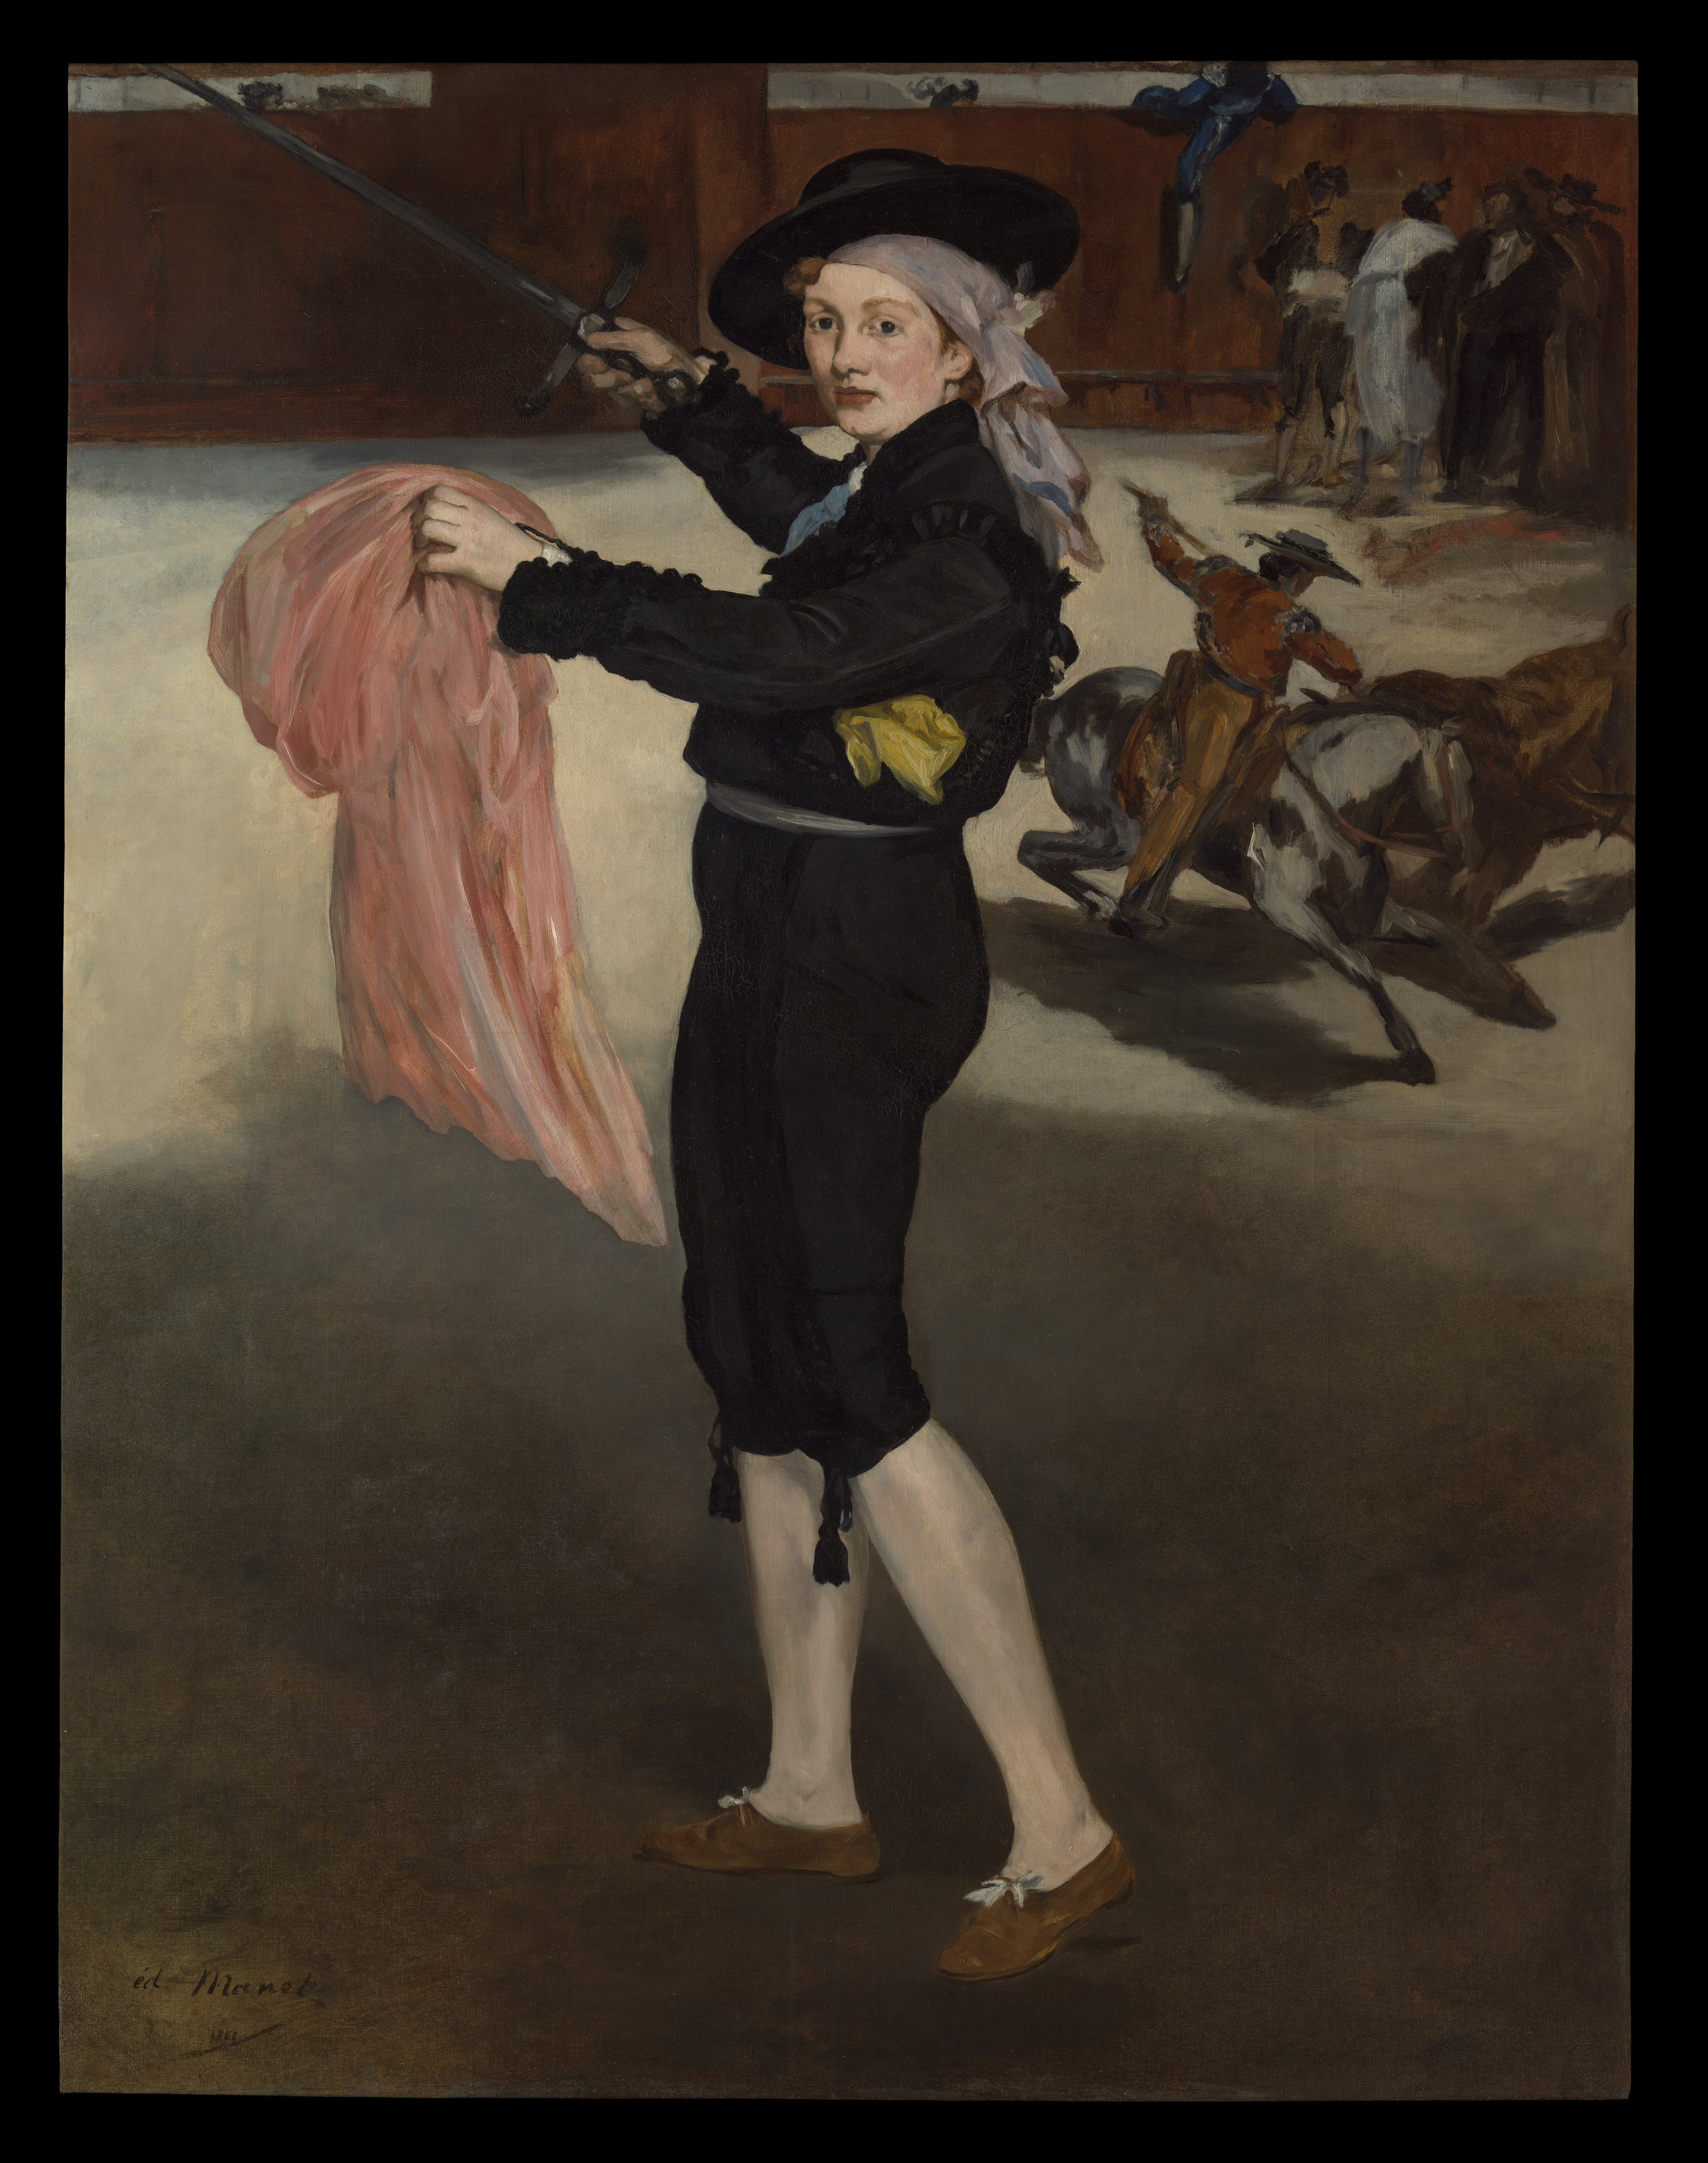 Edouard Manet, Mademoiselle V. . . in the Costume of an Espada